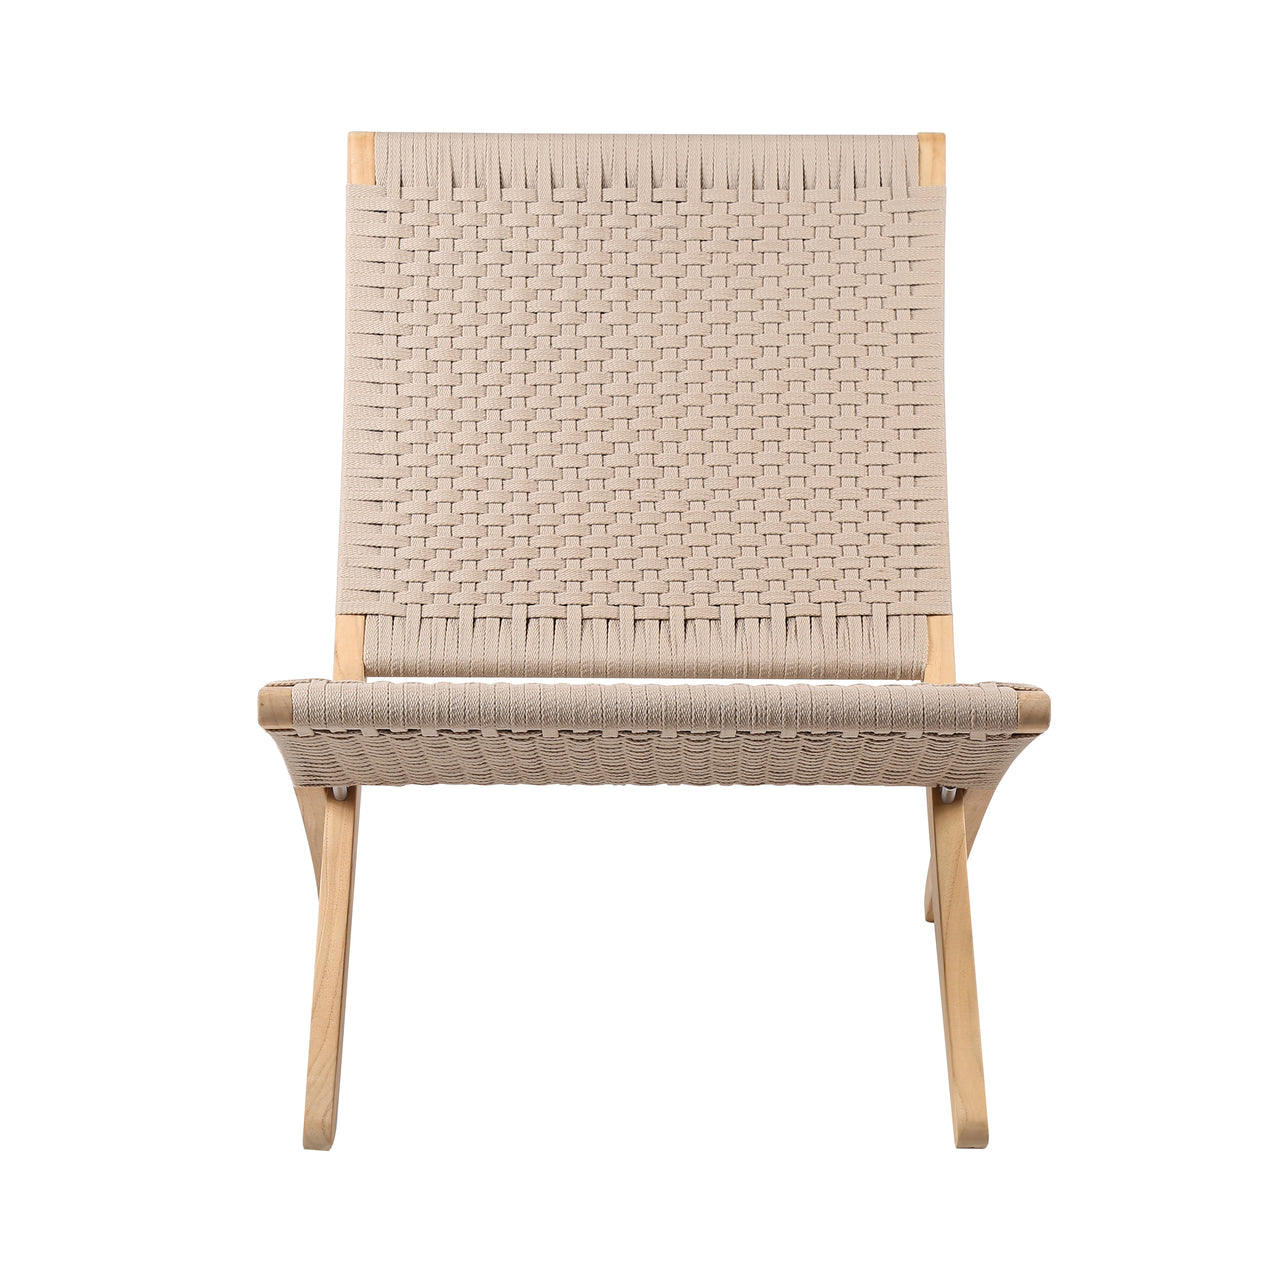 MG501 Outdoor Cuba Chair: Foldable + Sesame